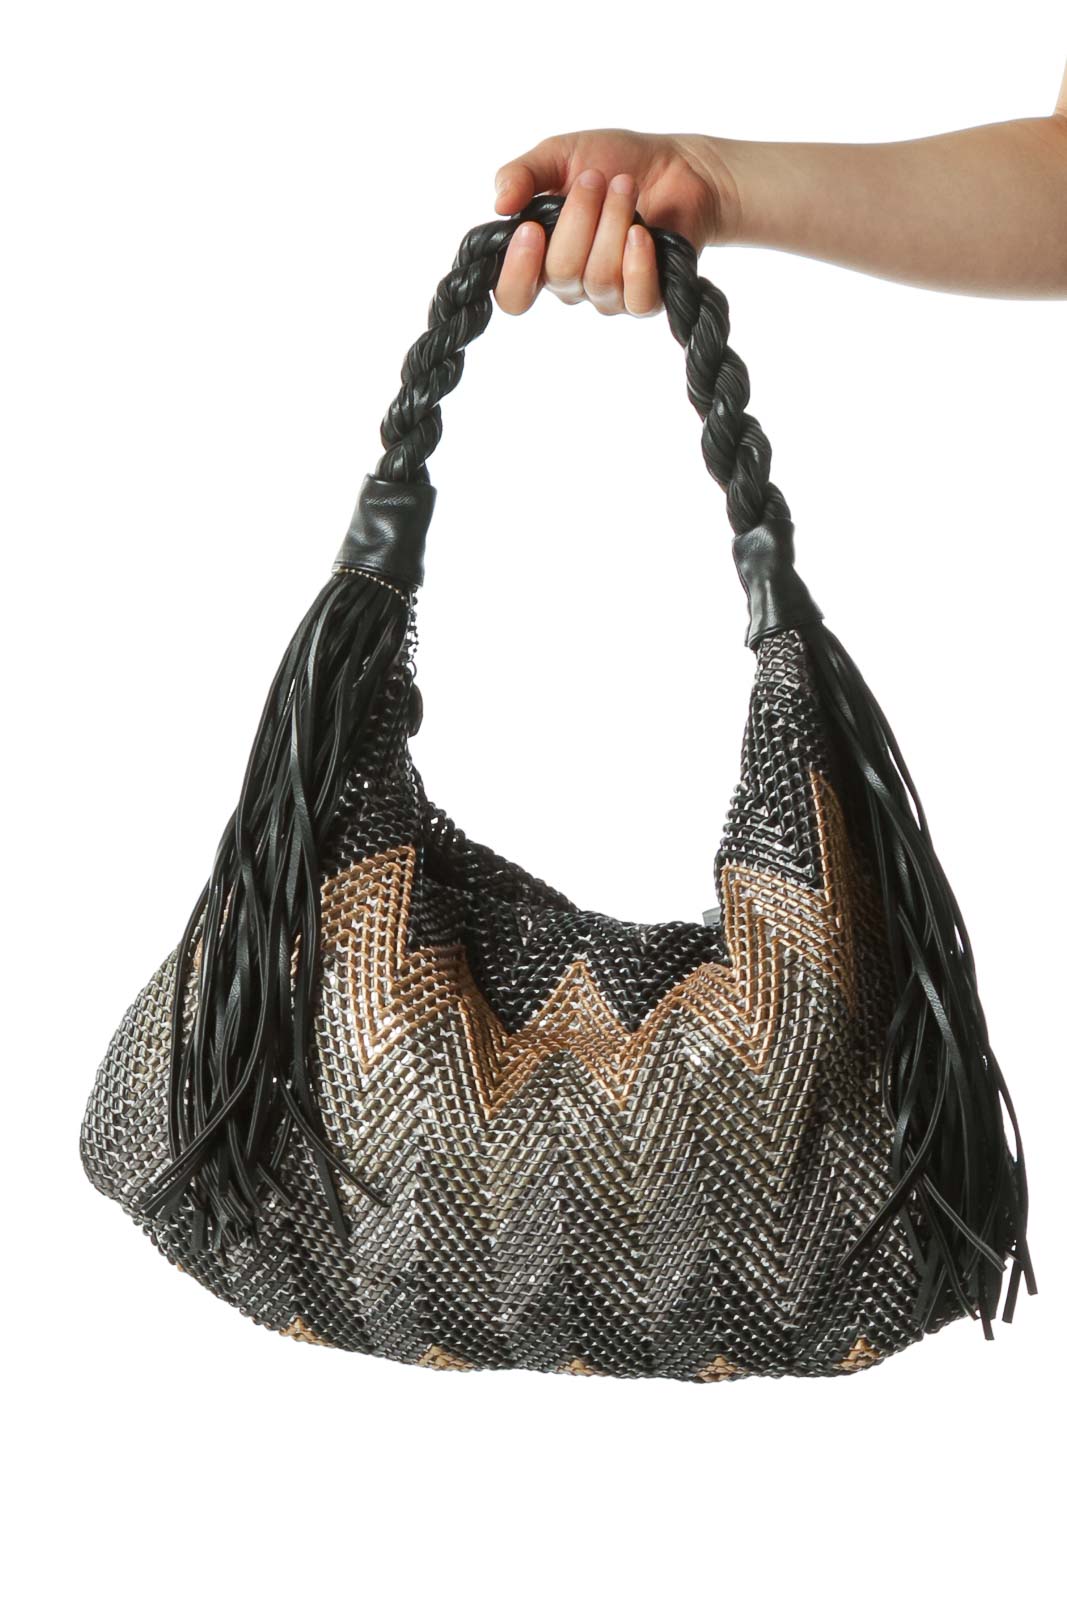 Black Tan and Silver Woven Shoulder Bag with Fringe and Twisted Shoulder Strap Front